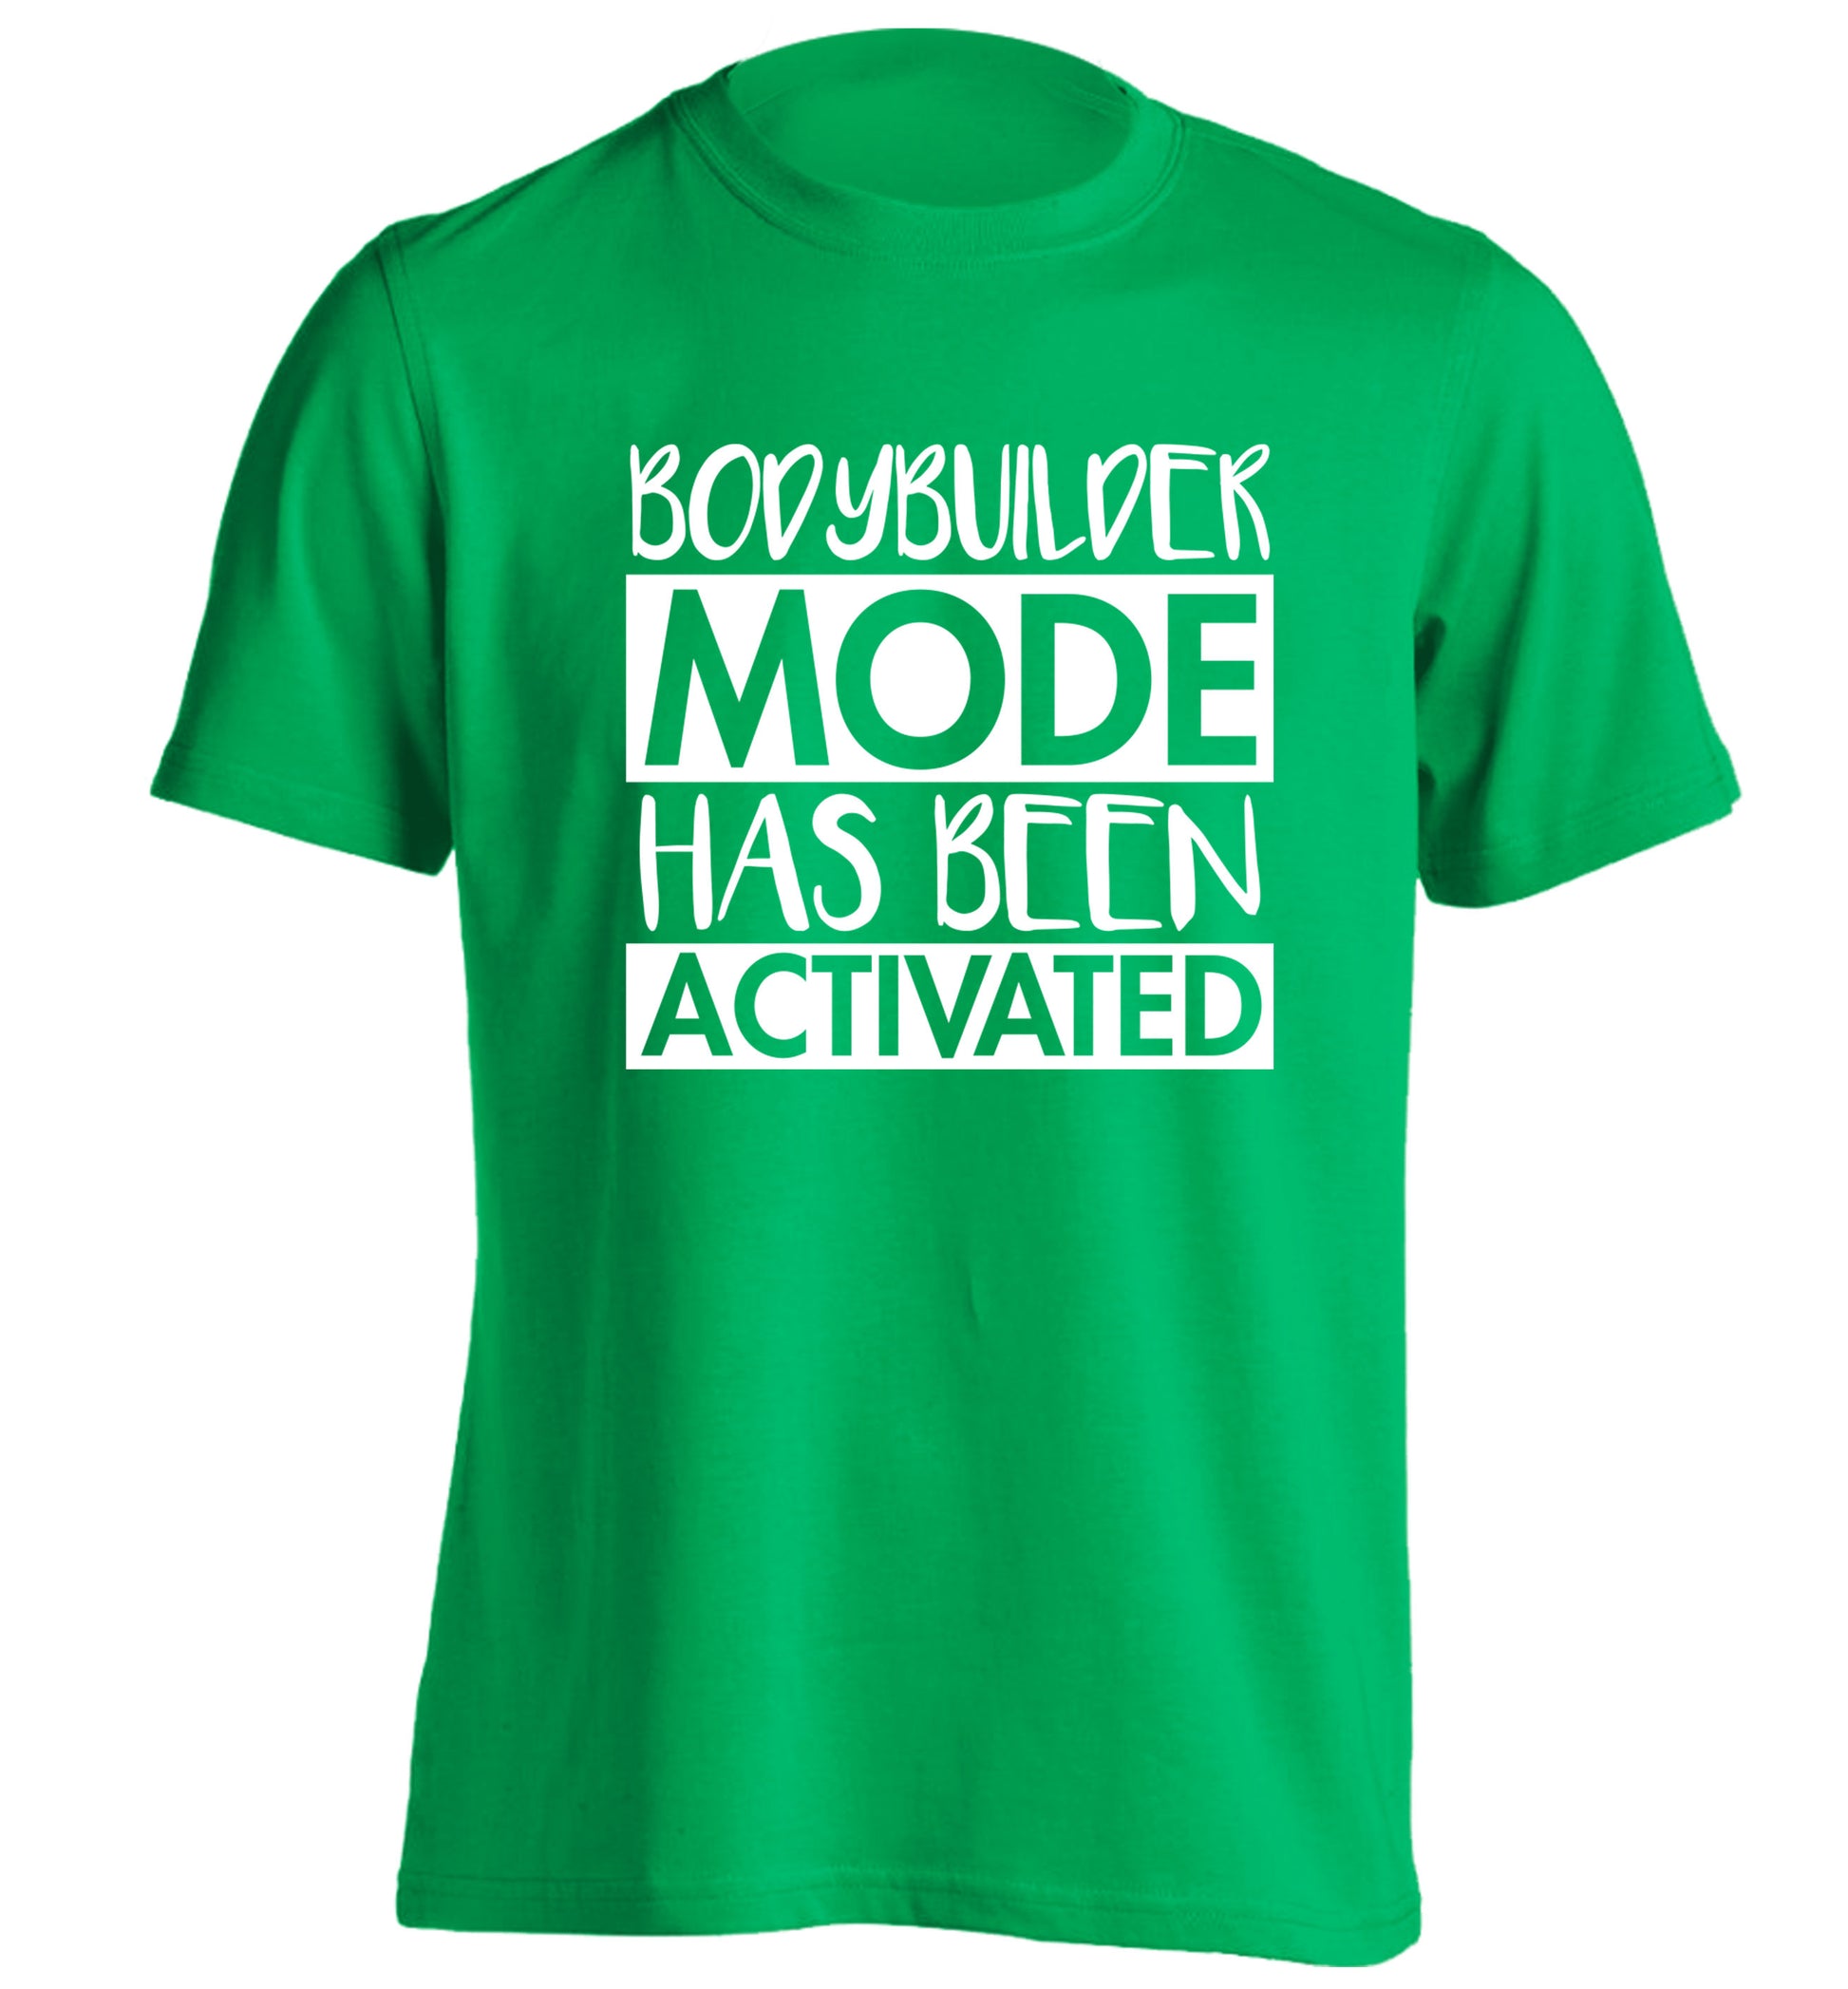 Bodybuilder mode activated adults unisex green Tshirt 2XL